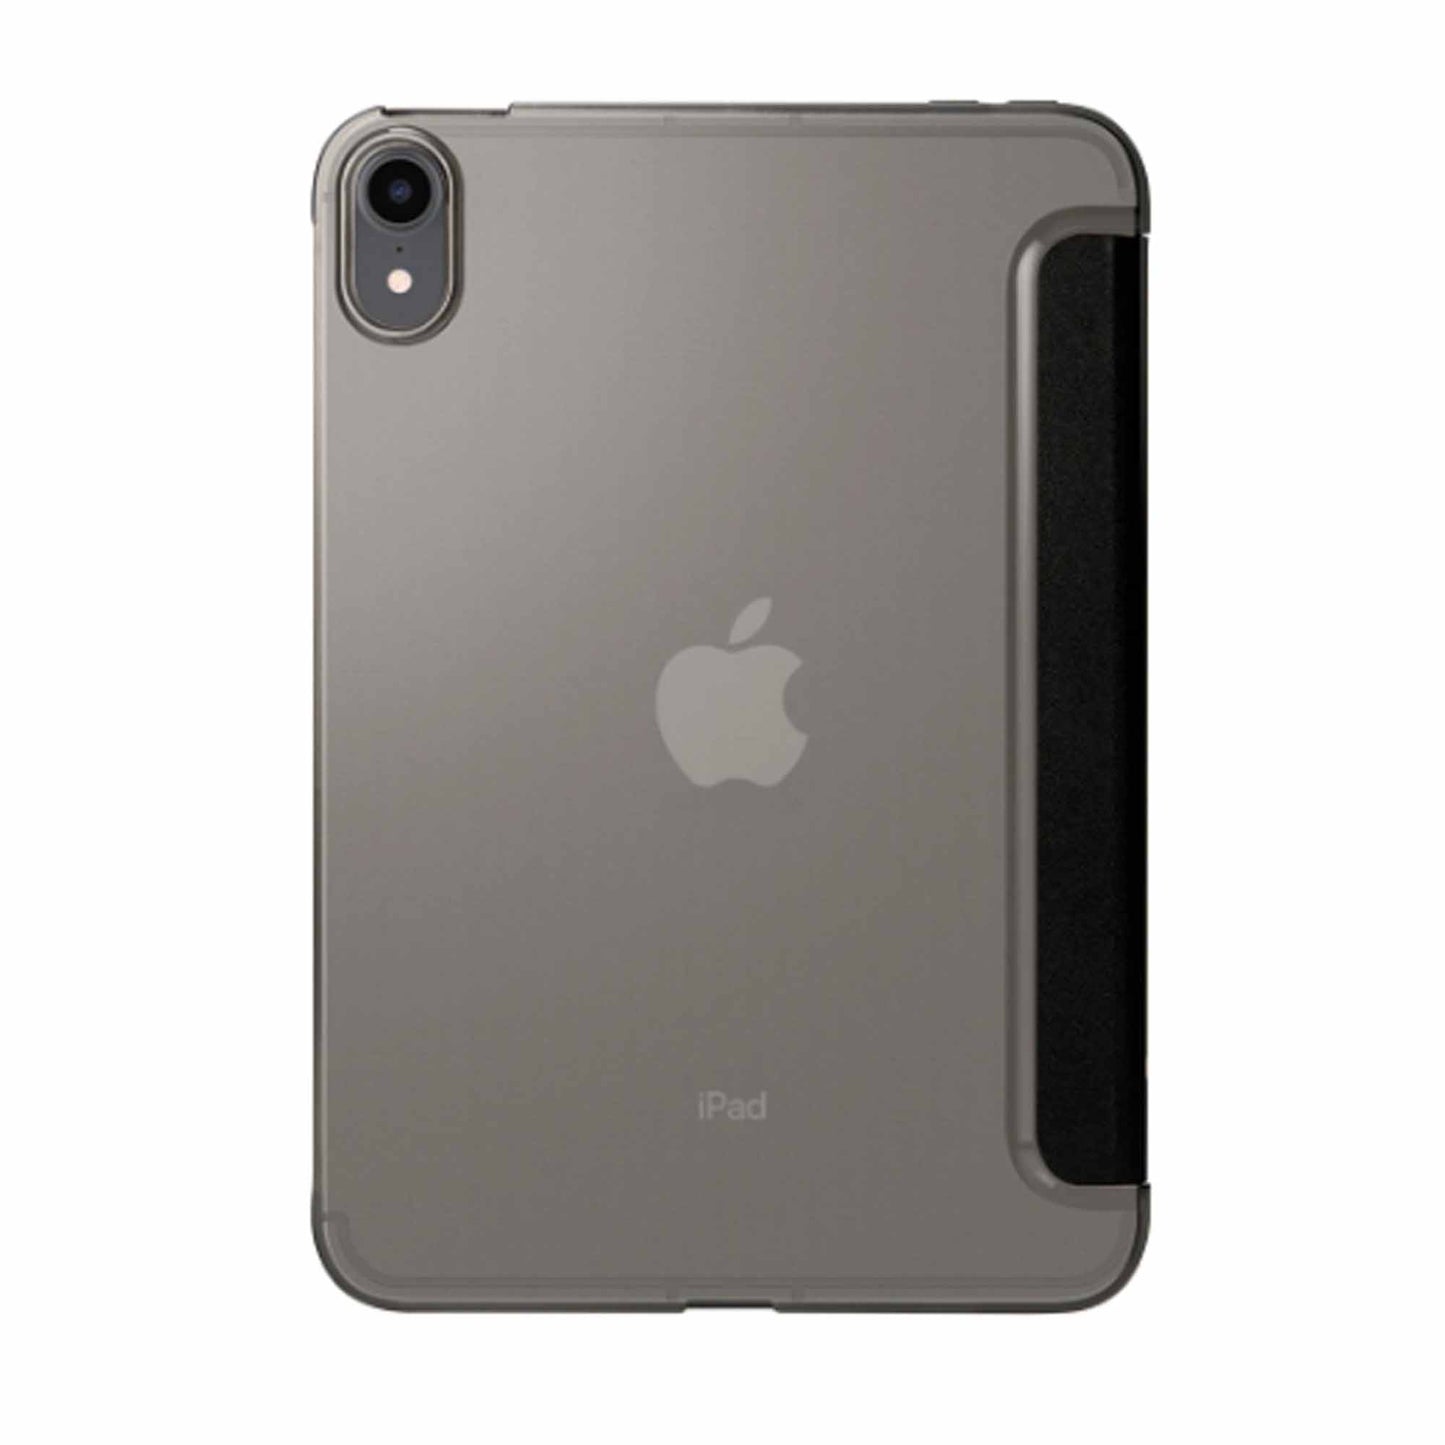 Spigen Smart Fold for iPad Mini 6 ( 2021 ) 8.3" - Black (Barcode: 8809811854114 )